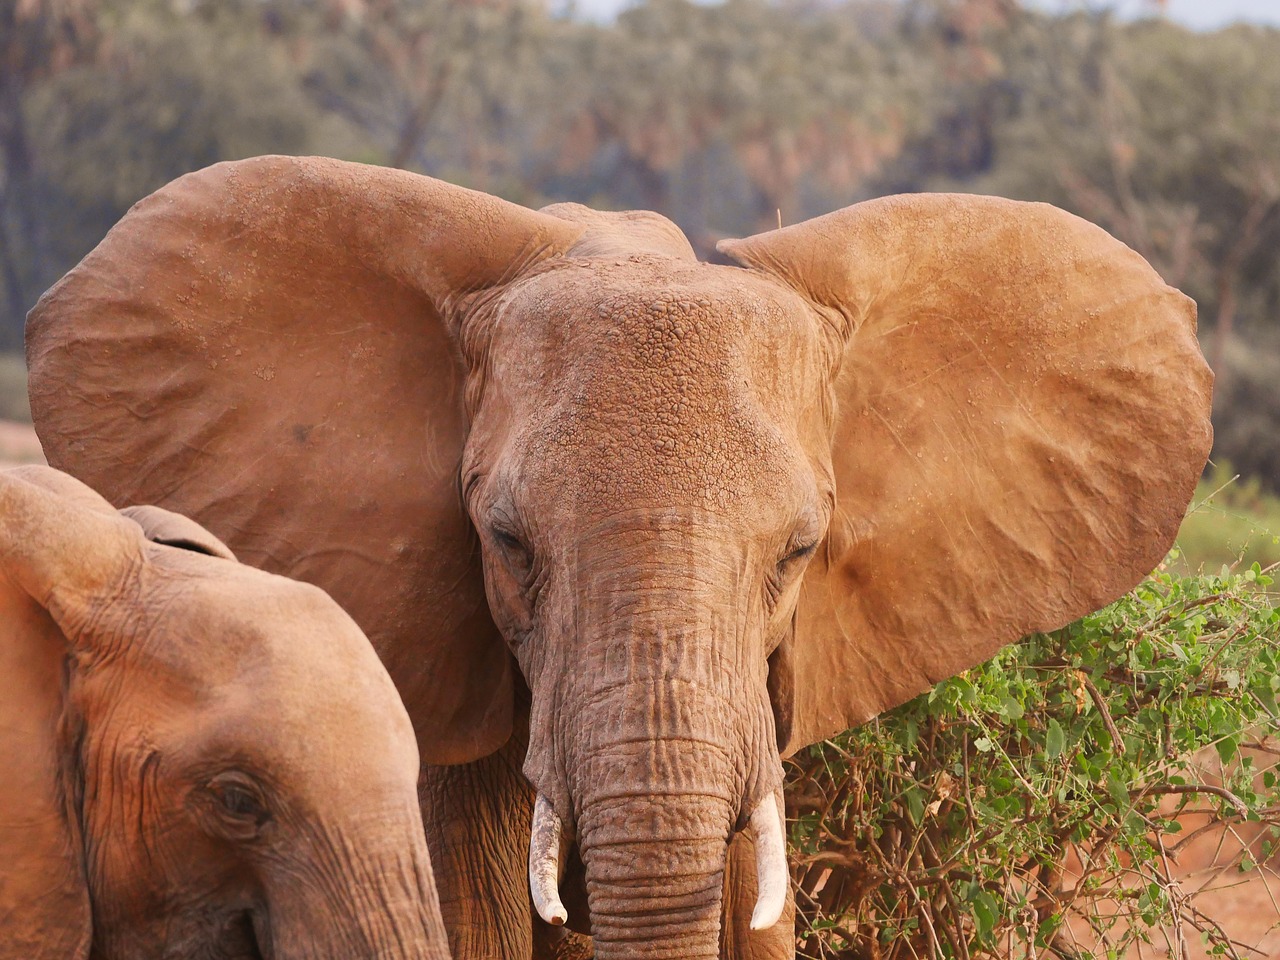 Image - elephant head ears tusk